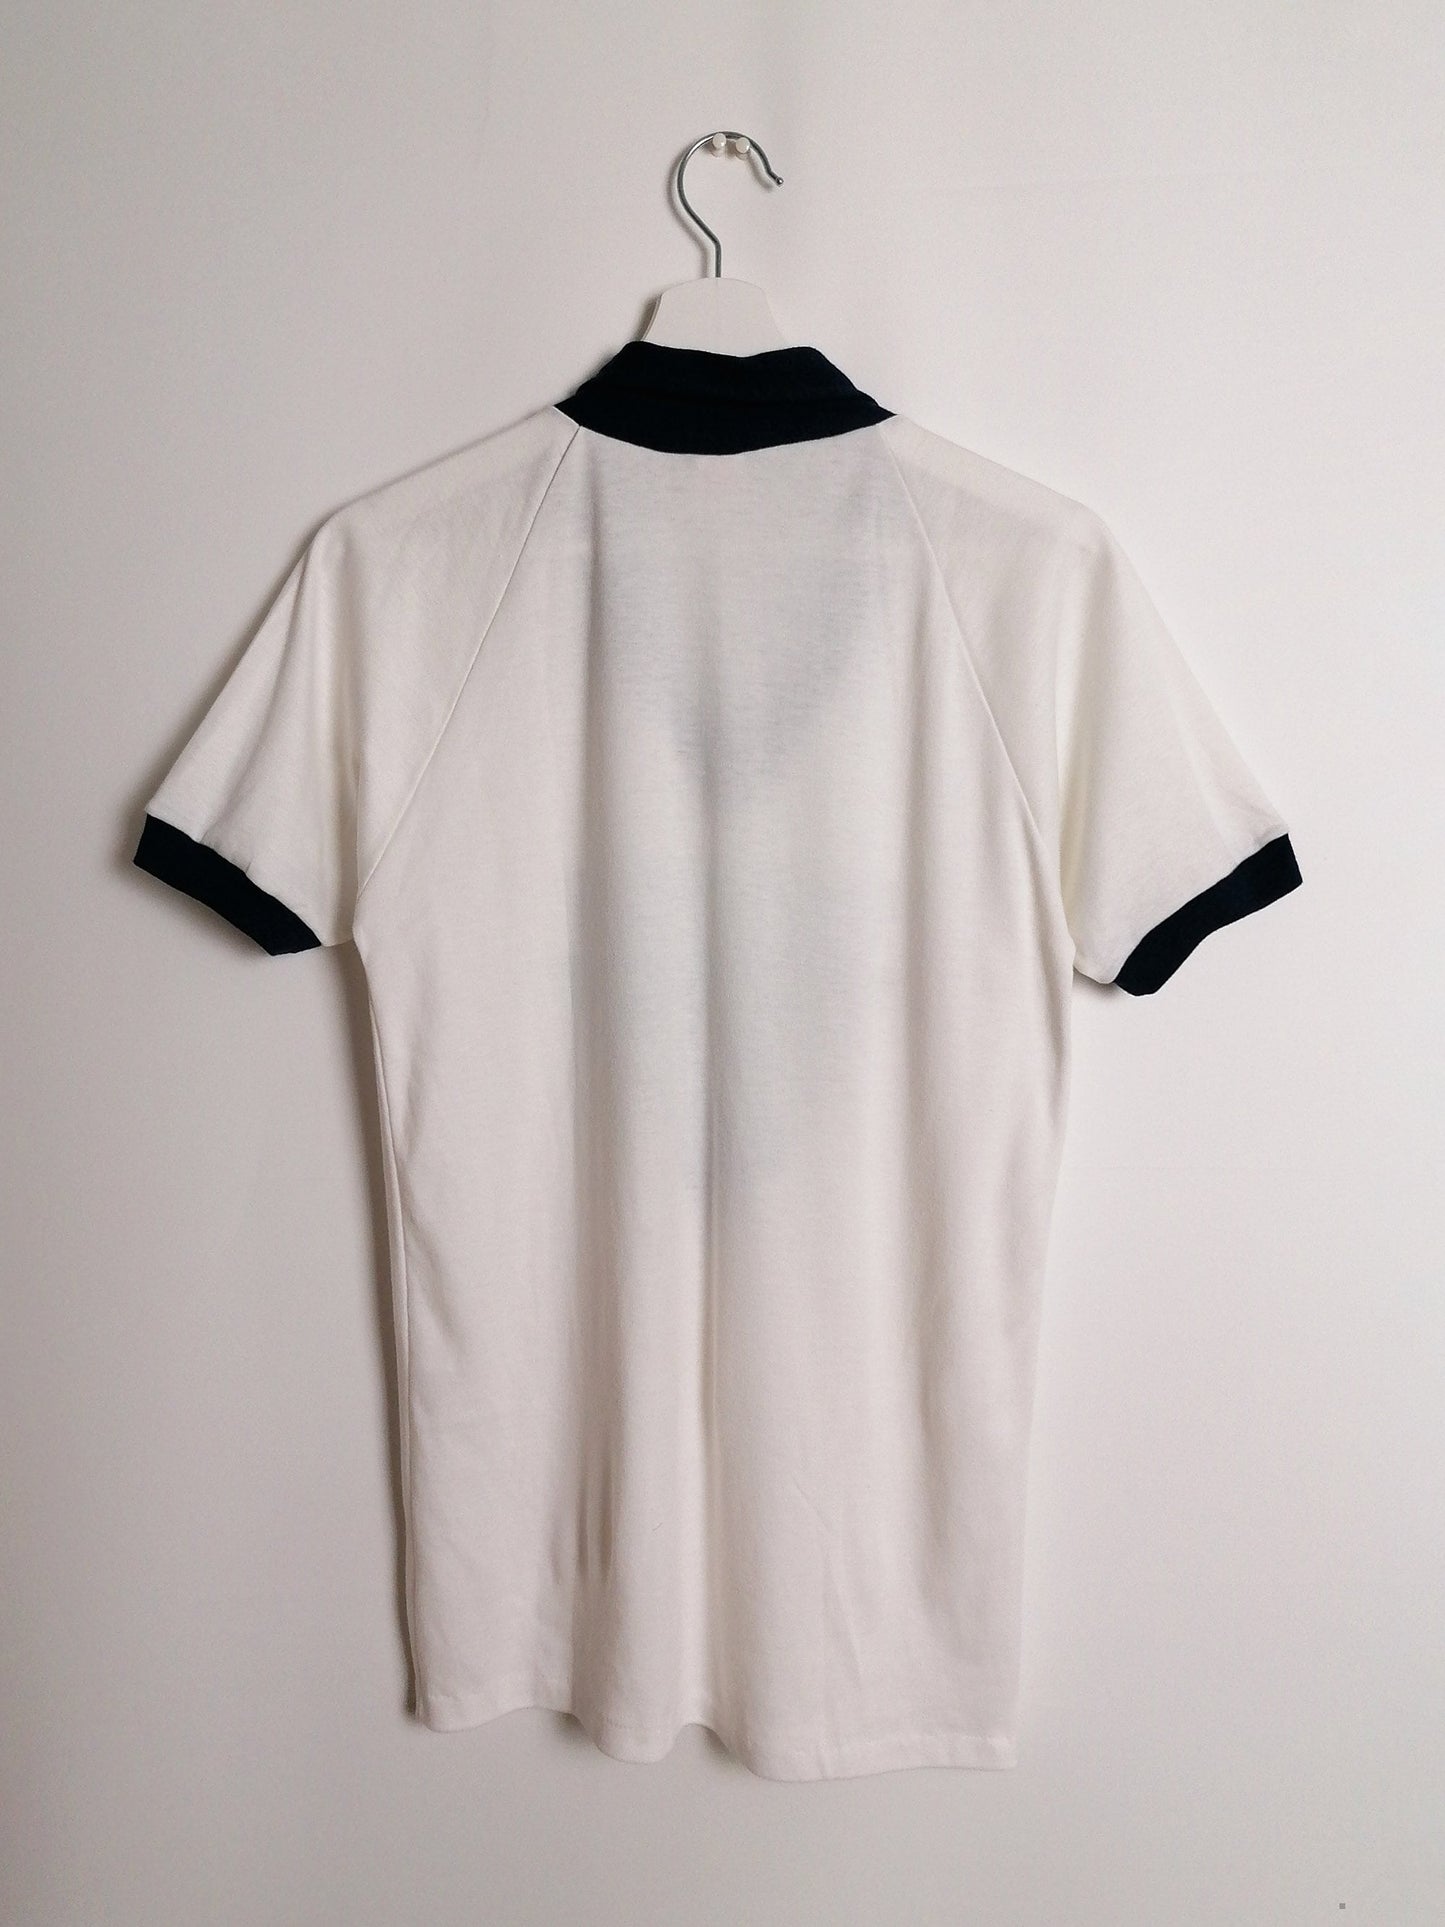 90's PHILIPS Mr. Tee Shirts Single Stitch Ringer T-shirt - size M-L